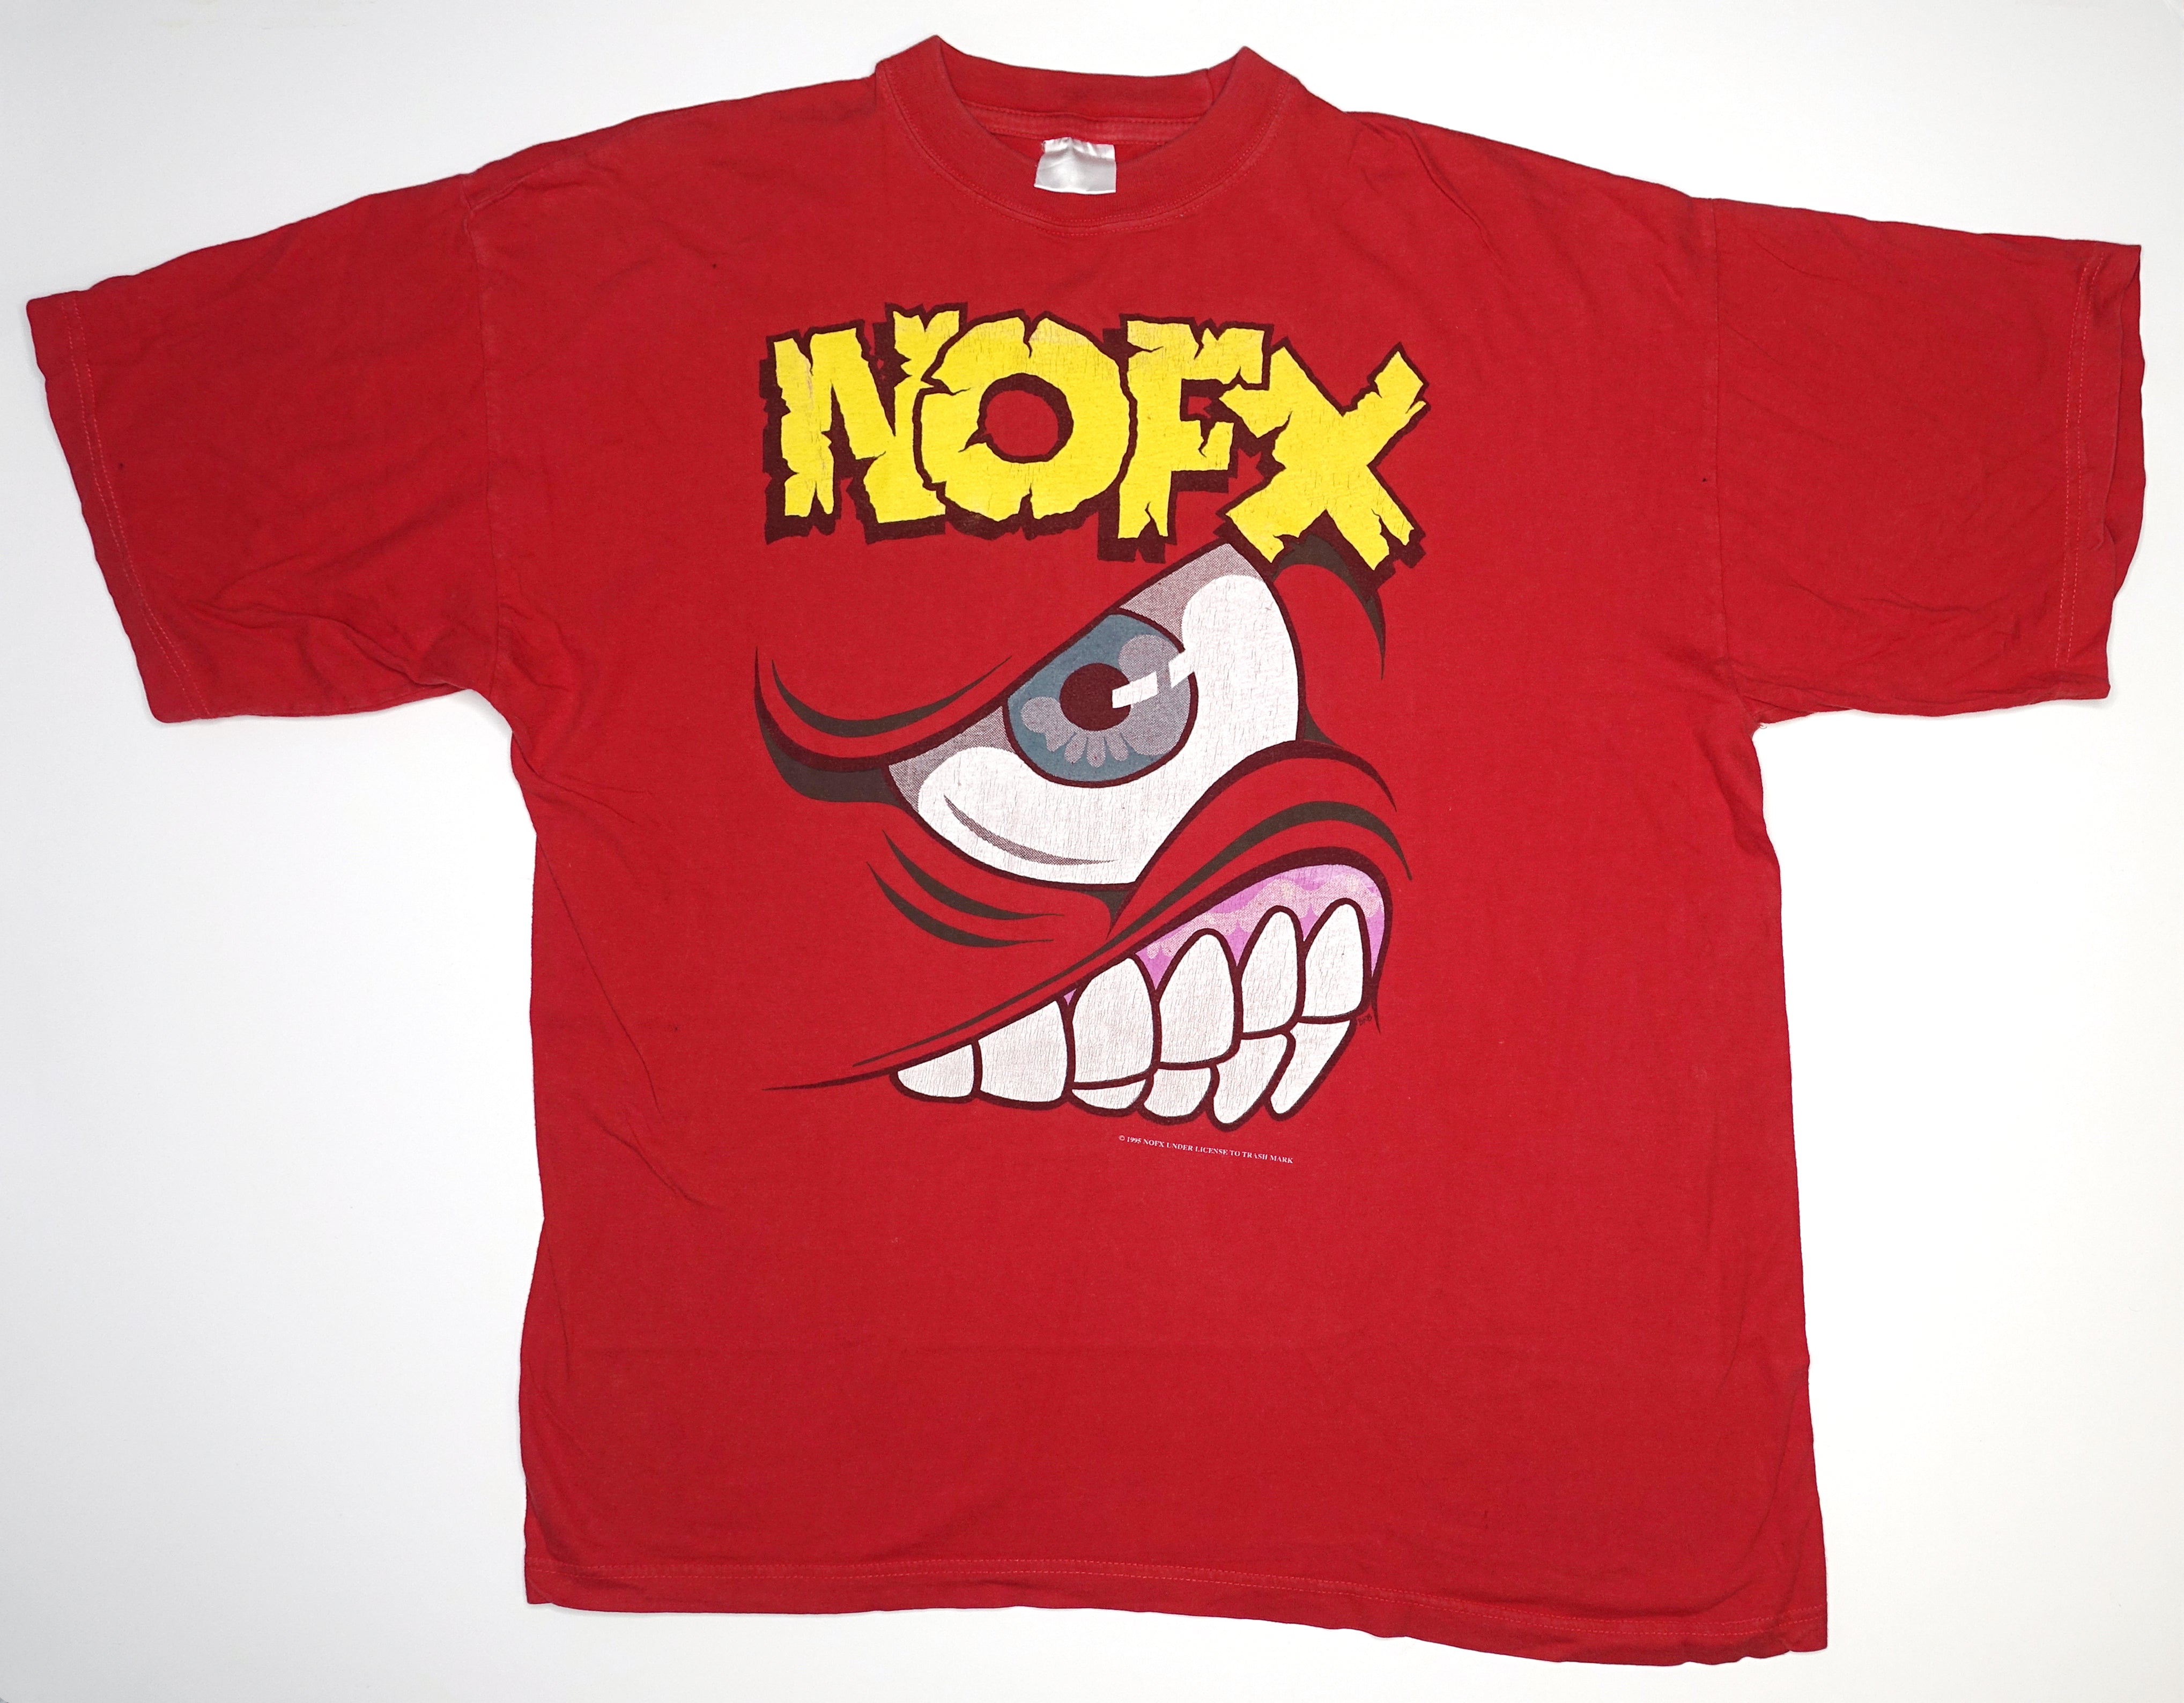 NOFX - Mons◦Tour Punk In Drublic 1995 European Tour Shirt (Red) Size XL